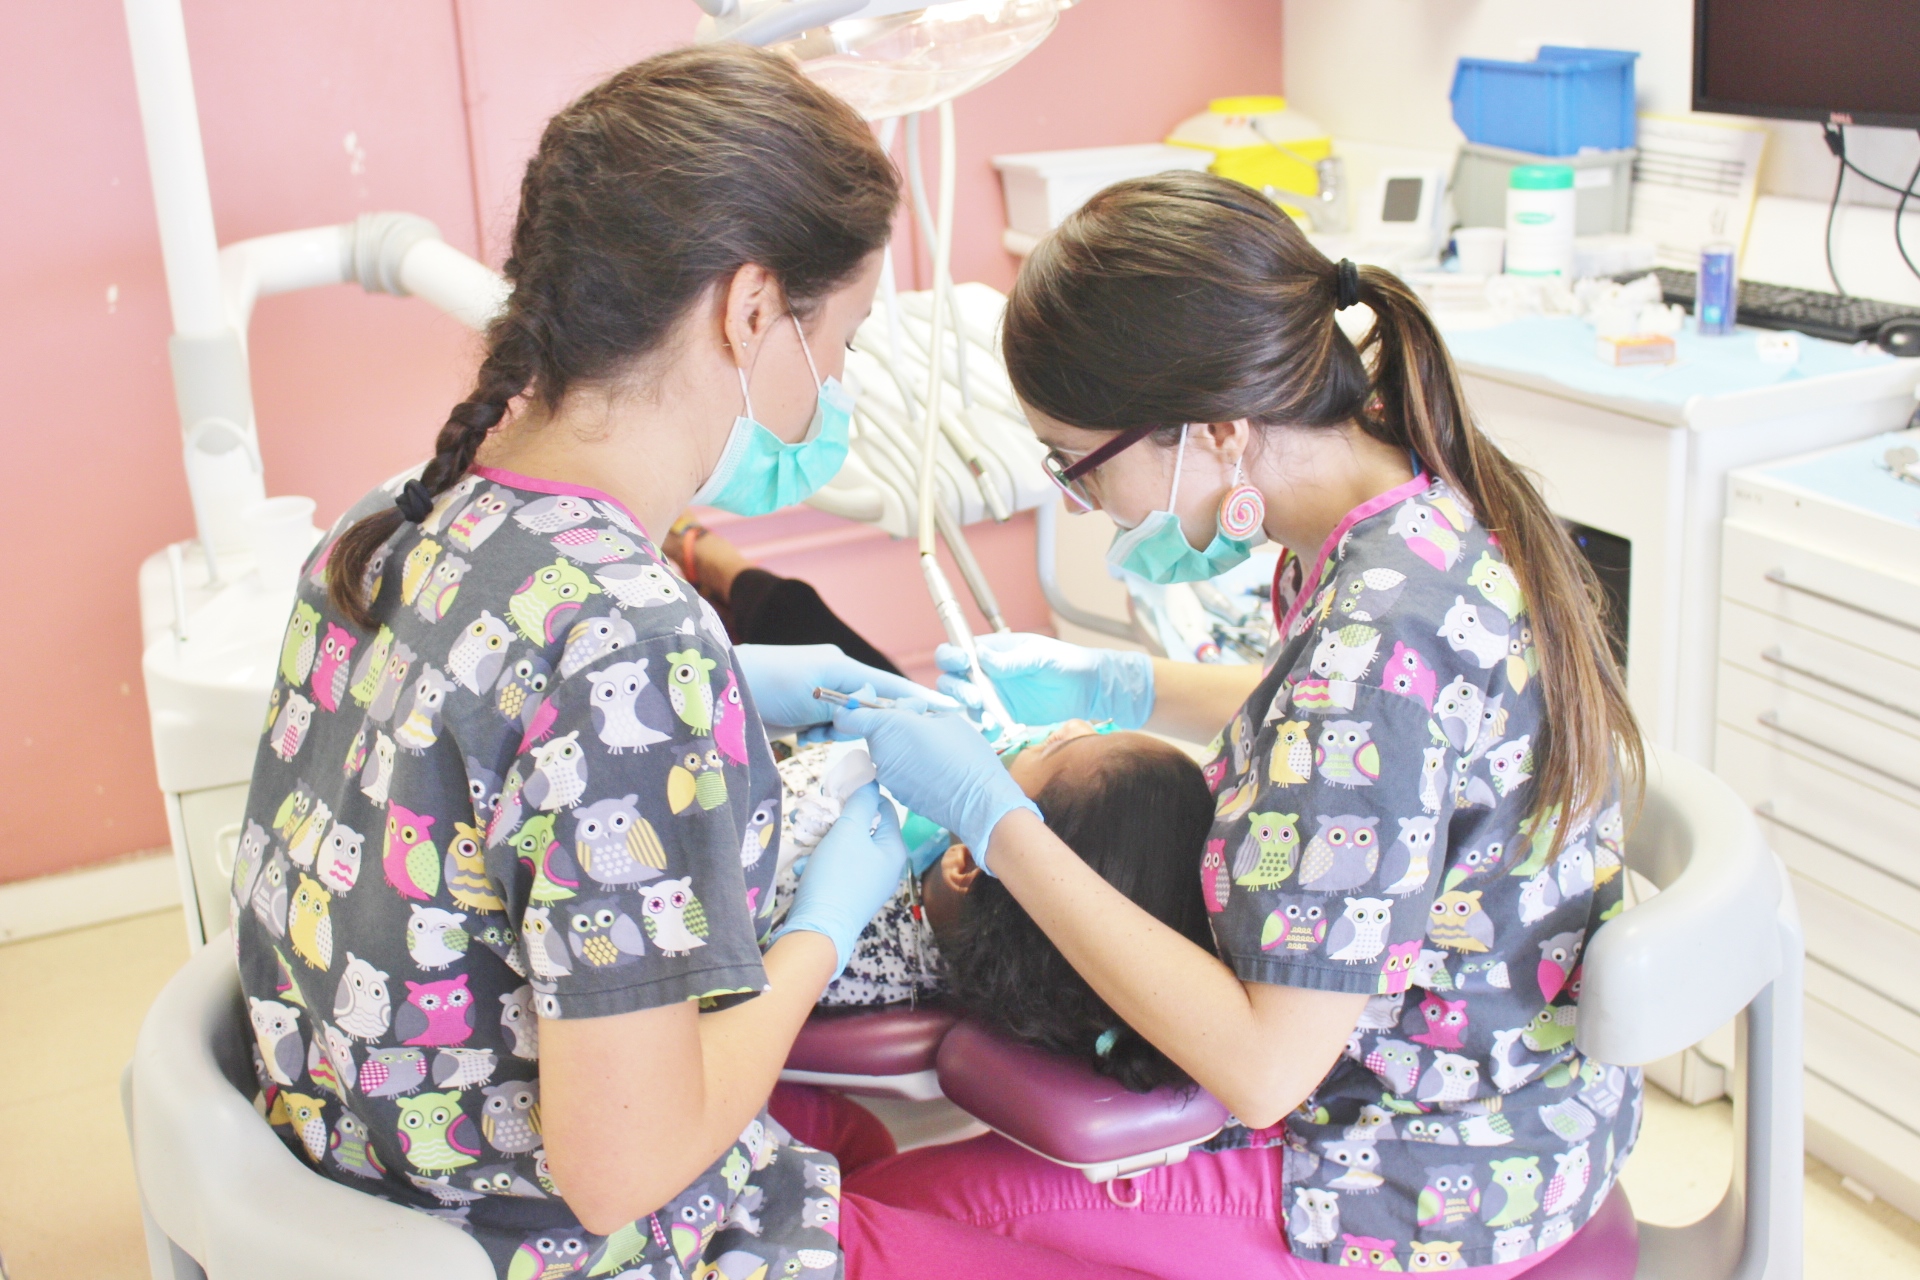 Niños y niñas saharauis han tenido visita en el Hospital Odontològic UB